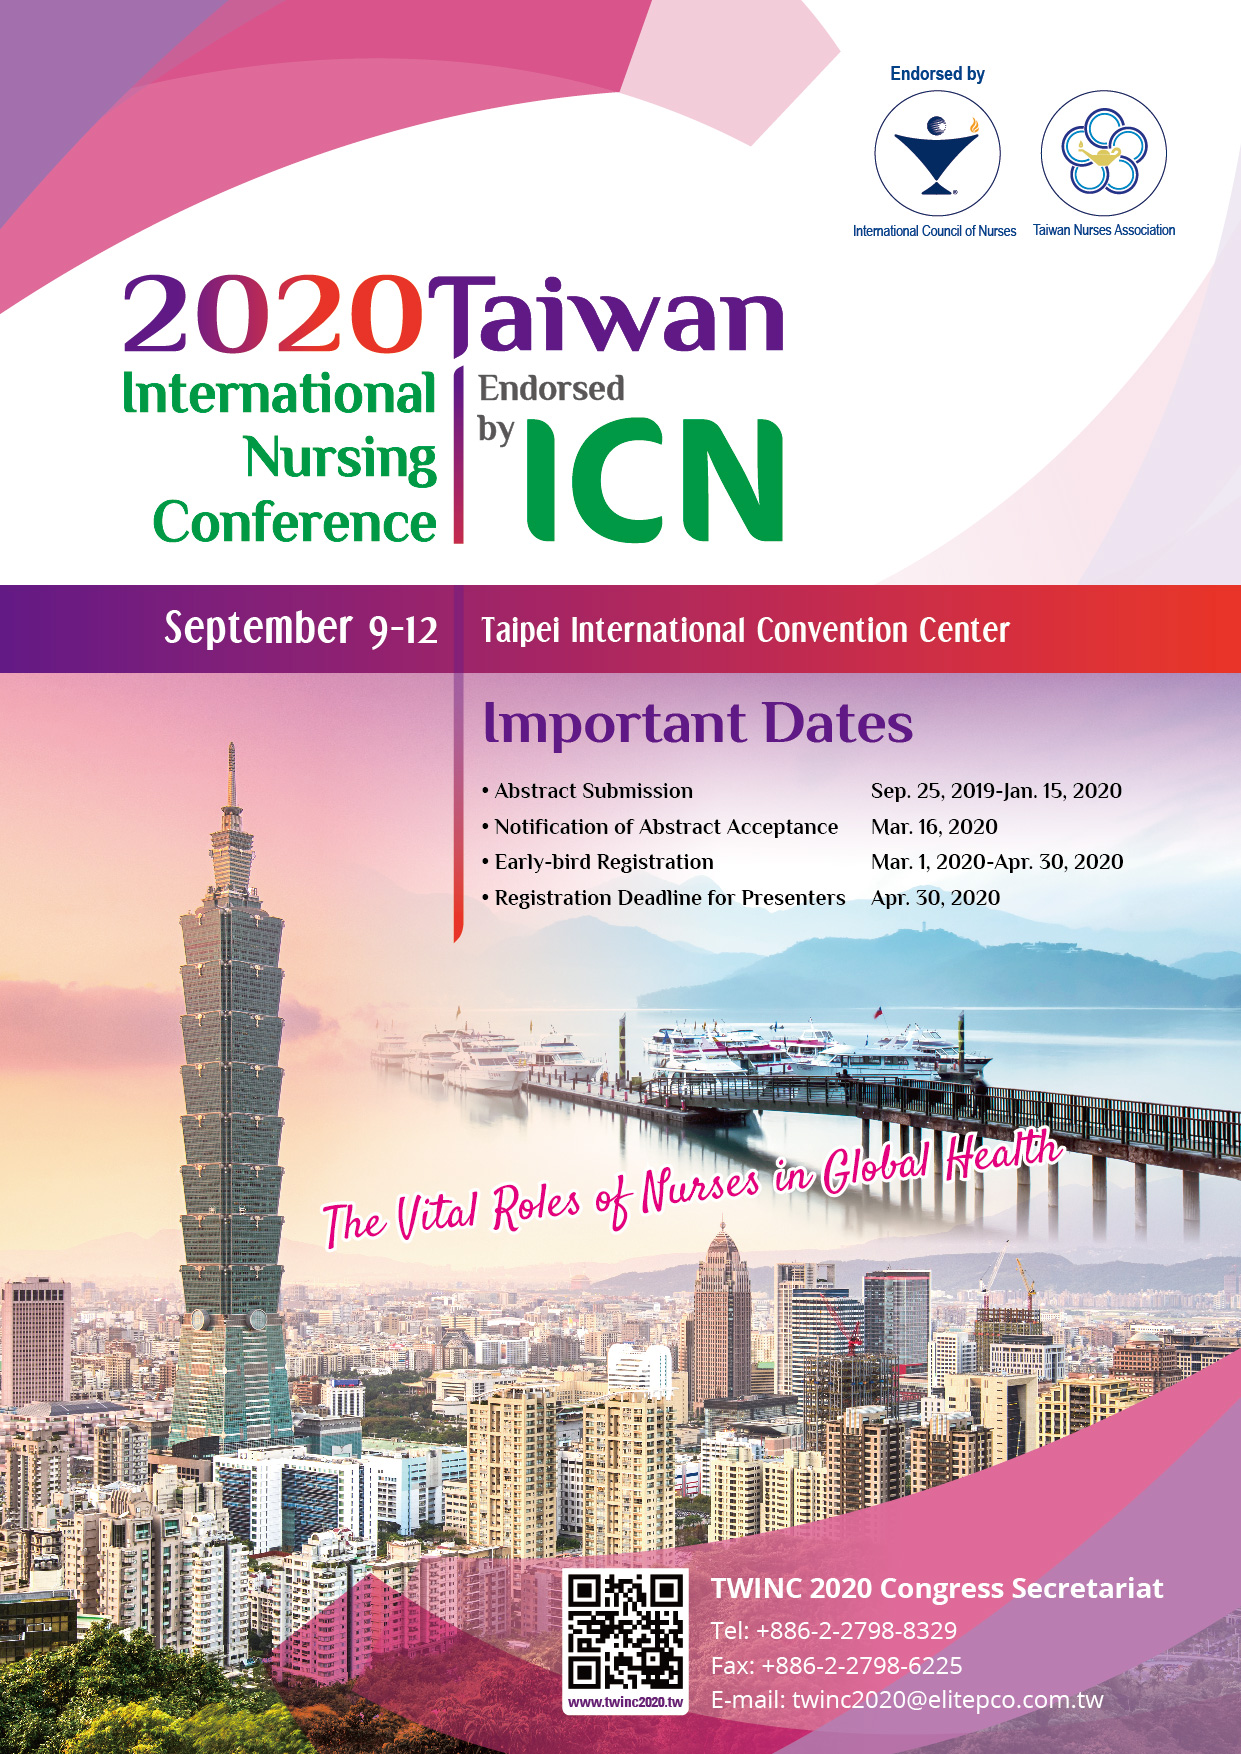 2020 Taiwan International Nursing Conference Endorsed by ICN ICN